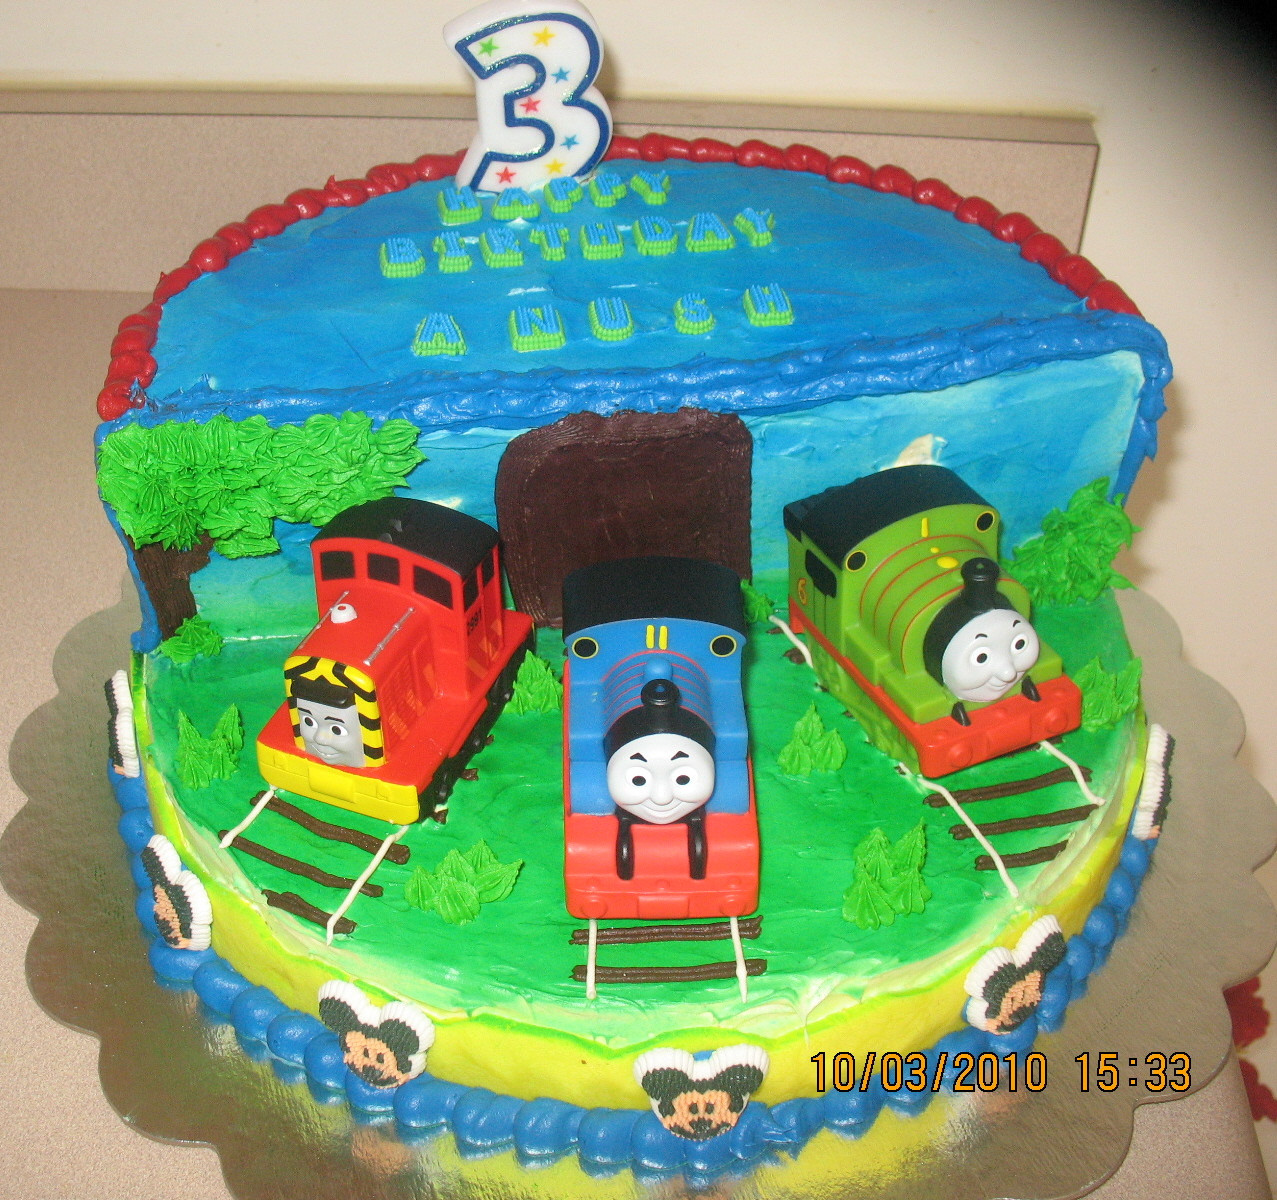 Thomas And Friends Birthday Cake
 ANU CAKES N BAKES Anush s 3rd Birthday Cake Thomas and